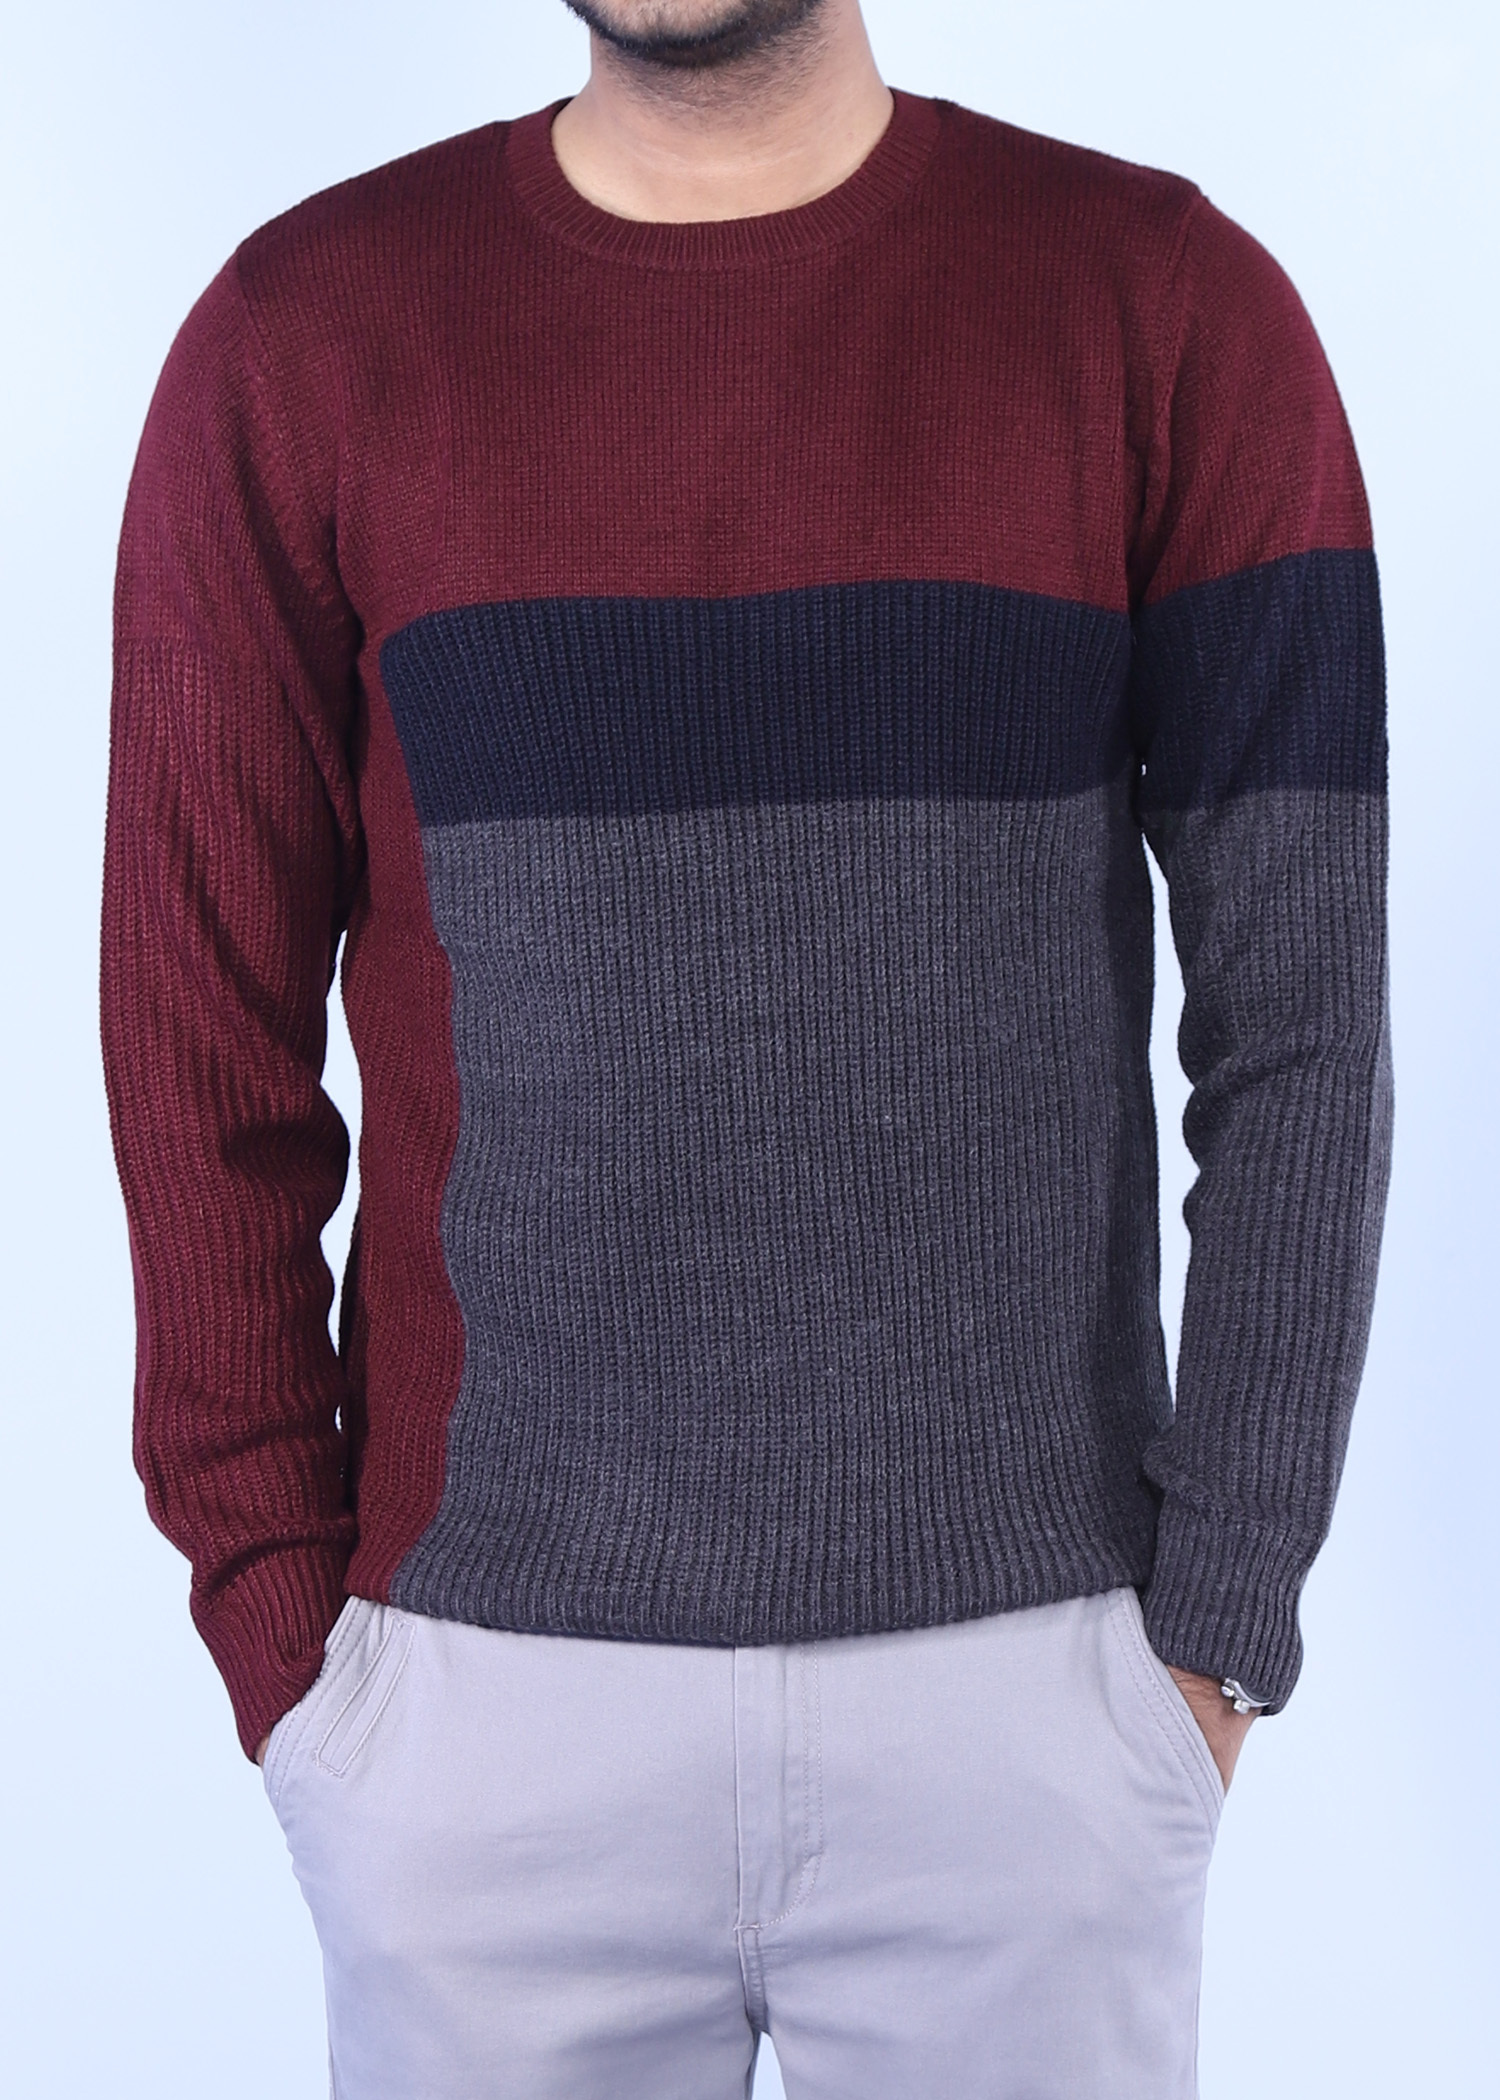 hillstar iv sweater bordeaux color half front view